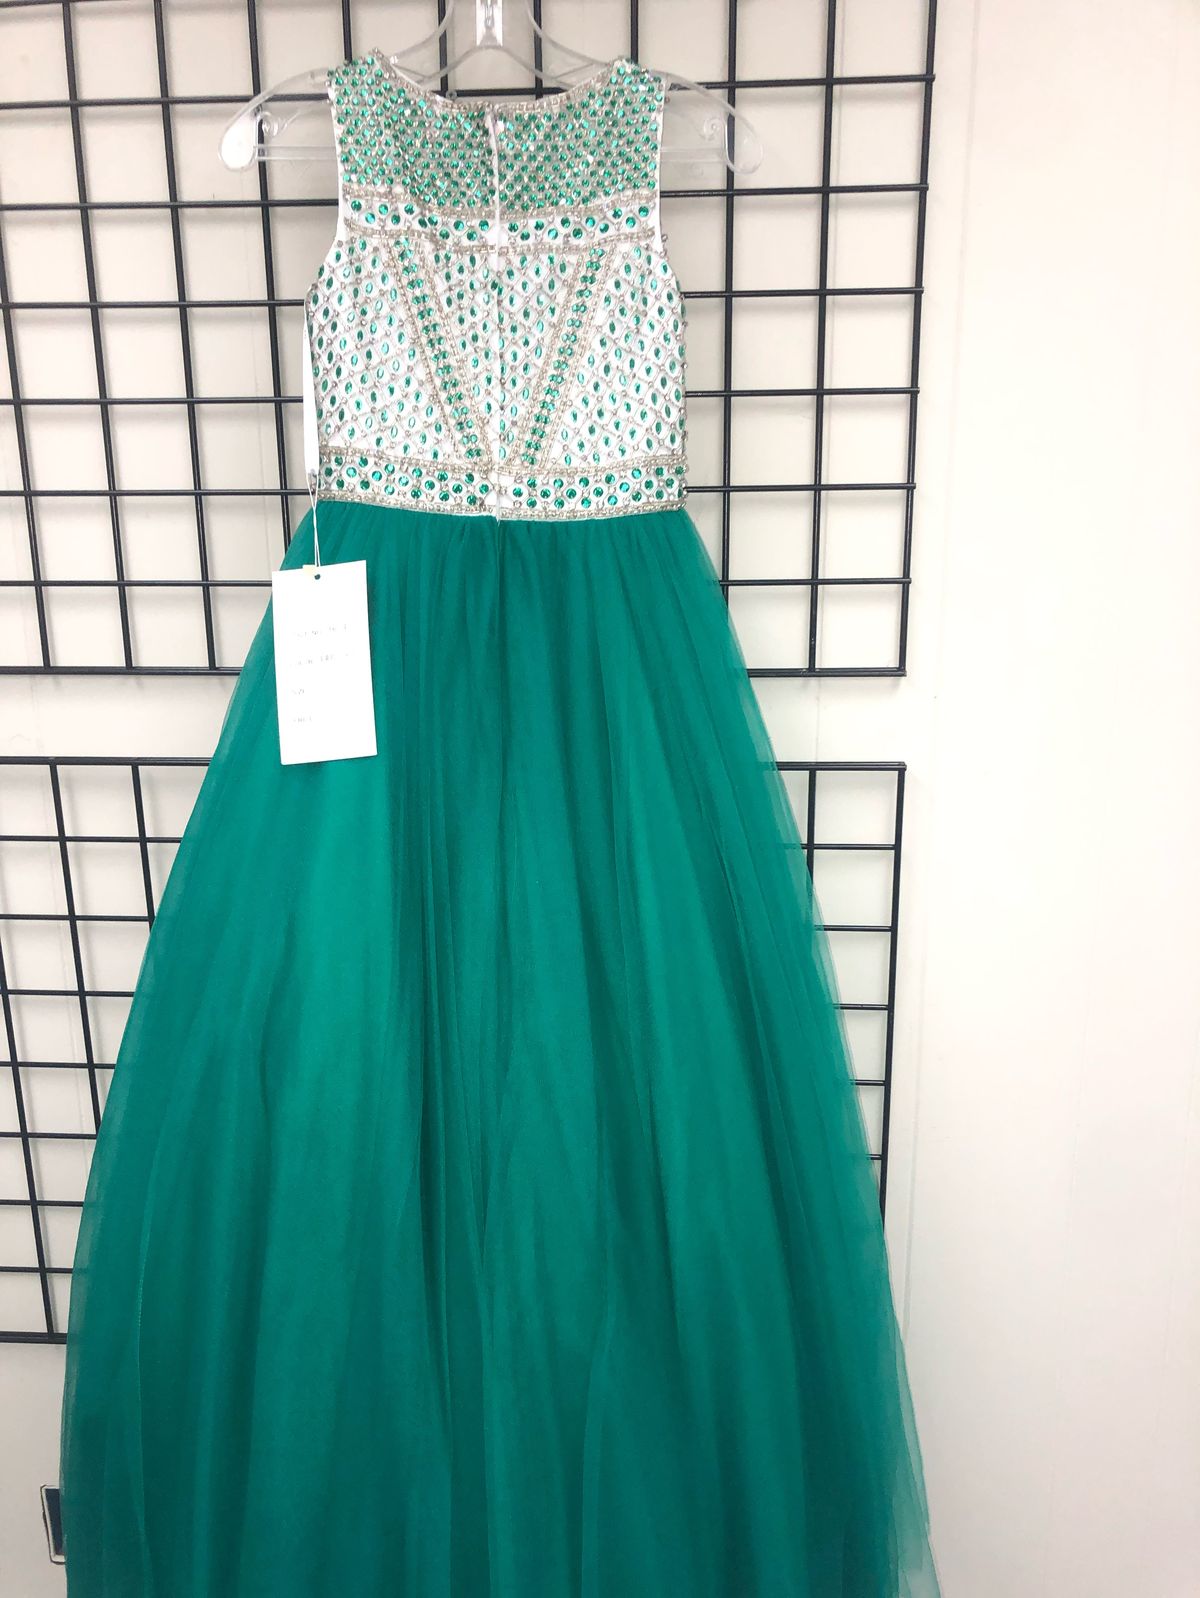 Rachel Allan Girls Size 8 Prom Emerald Green Ball Gown on Queenly